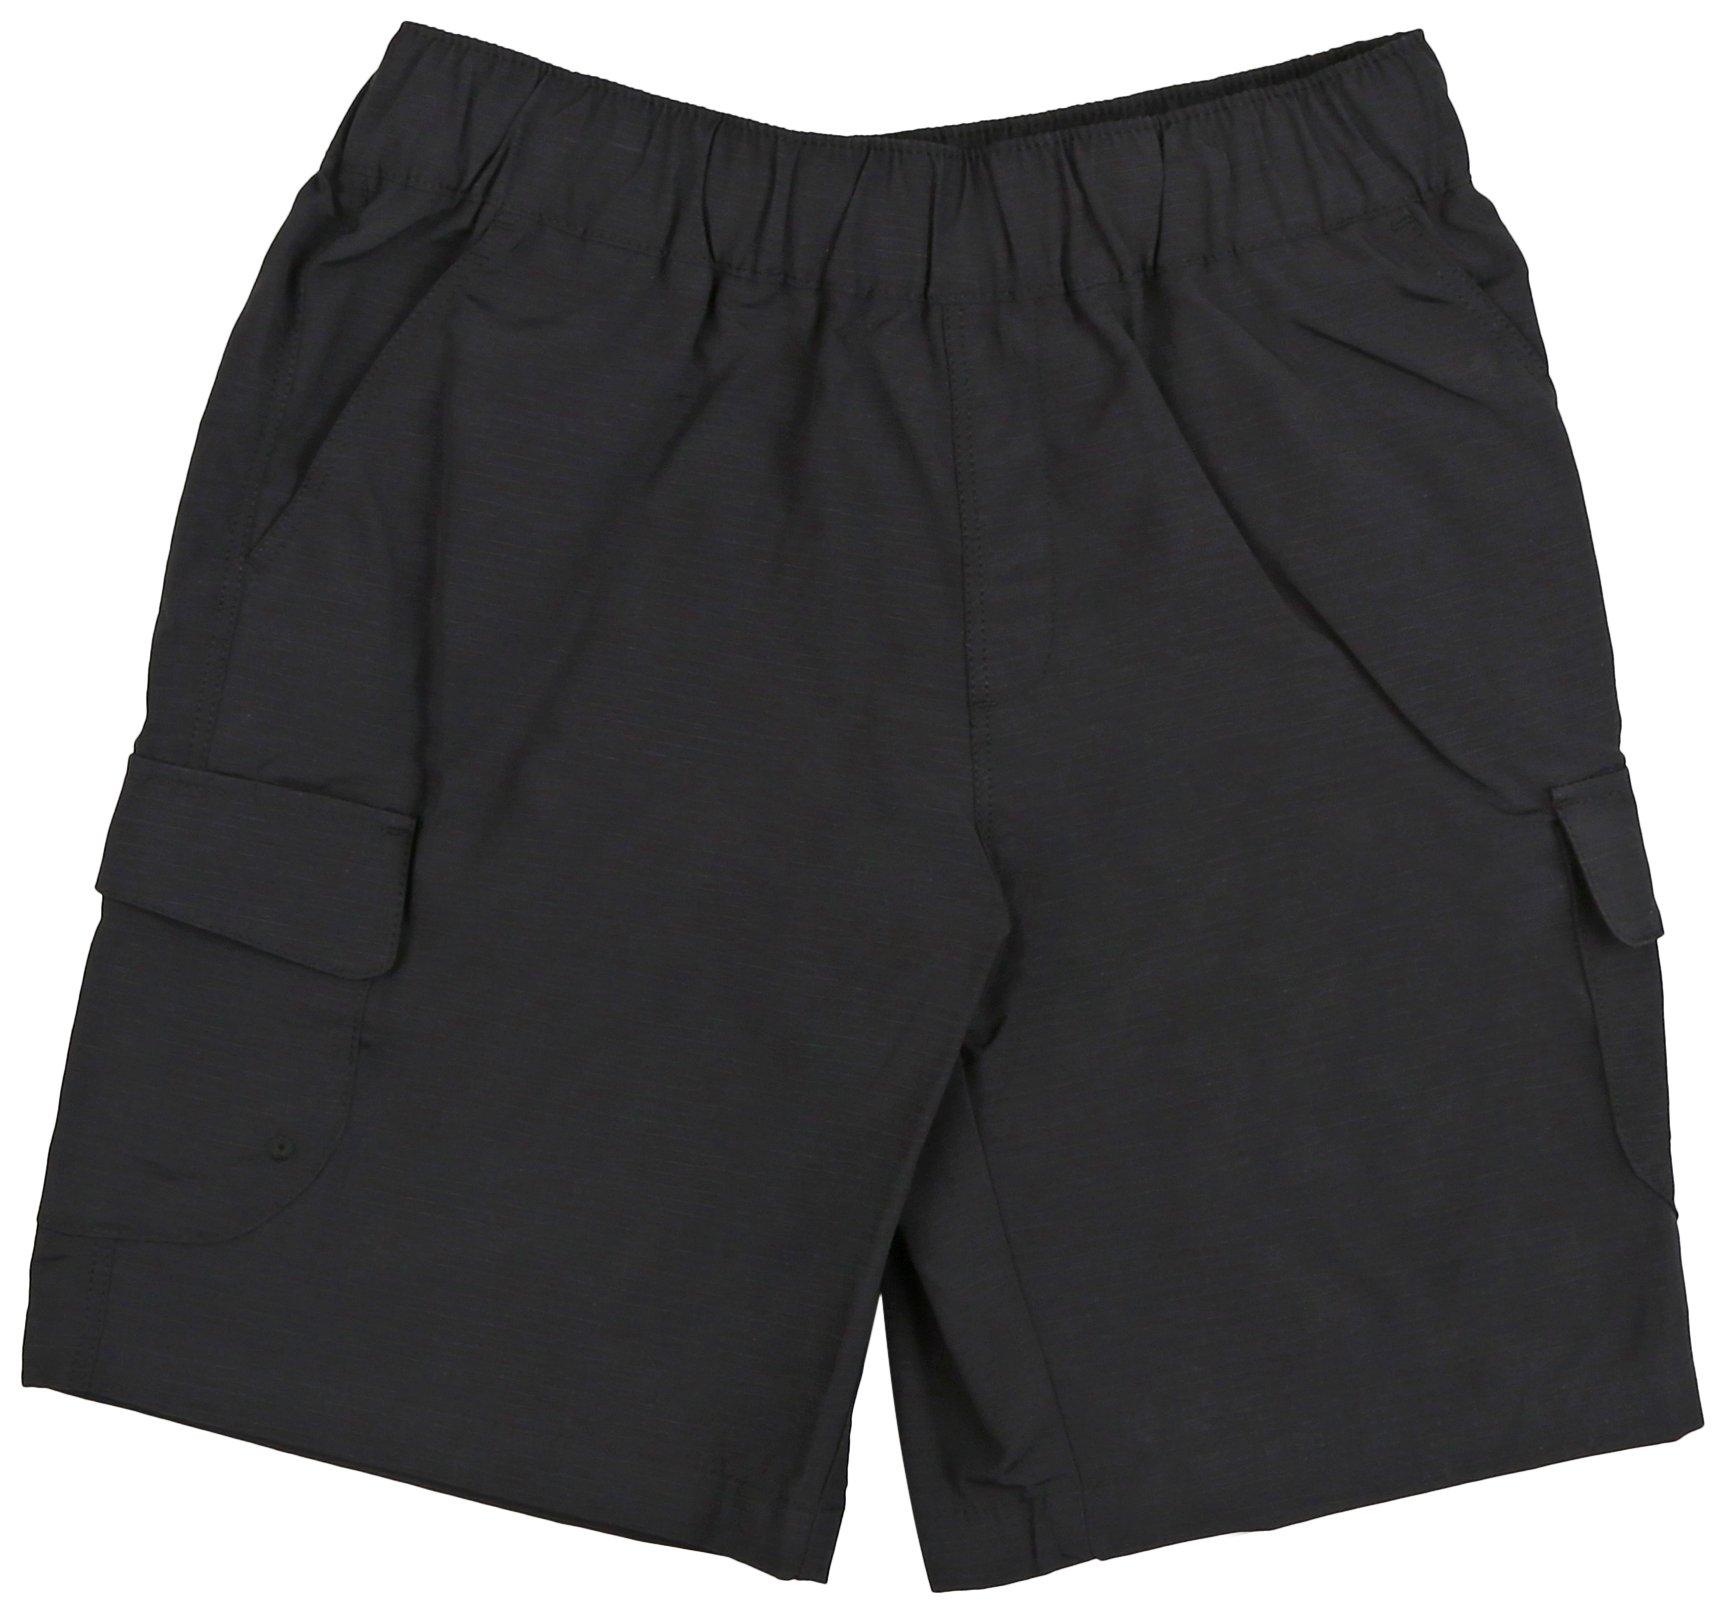 Reel Legends Little Boys 4 Cargo Tarpon Shorts - Navy - X-Small